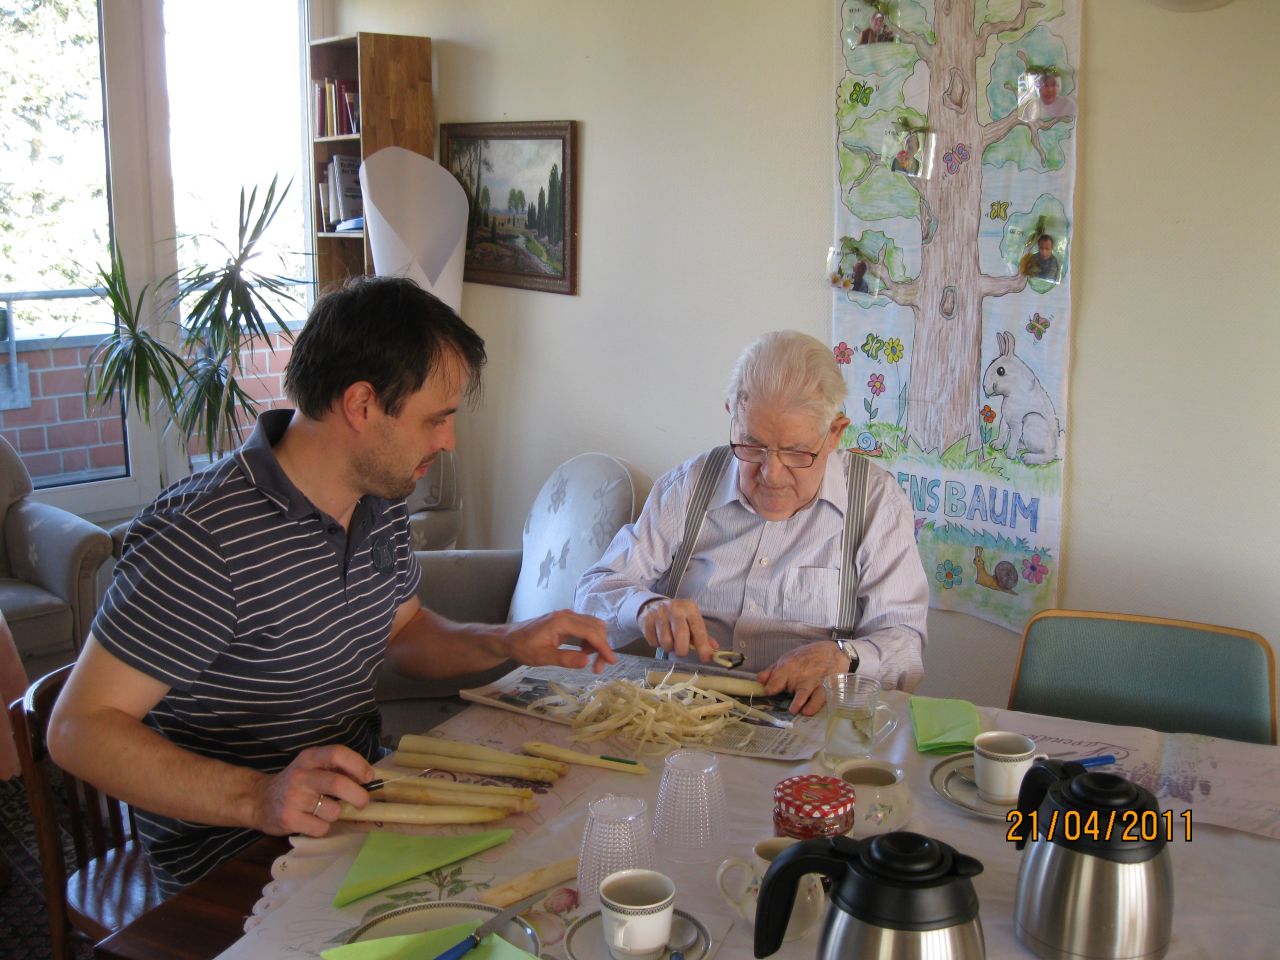 Caregiver Thomas Ganschow and resident Egon Hanss peel asparagus for dinner.